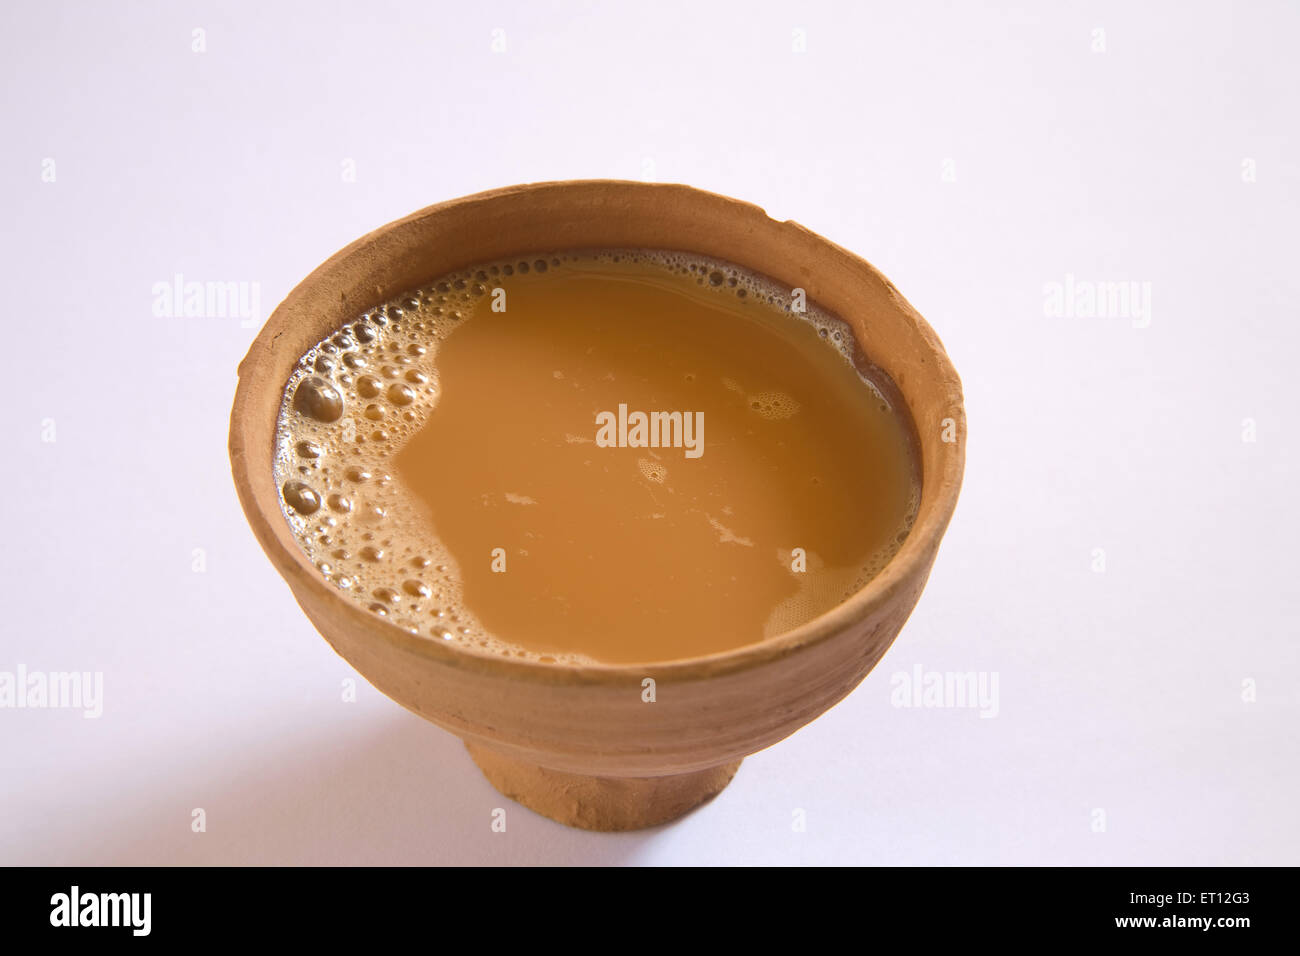 Tè caldo con latte in terra creta pentola kulhad chai su sfondo bianco Foto Stock